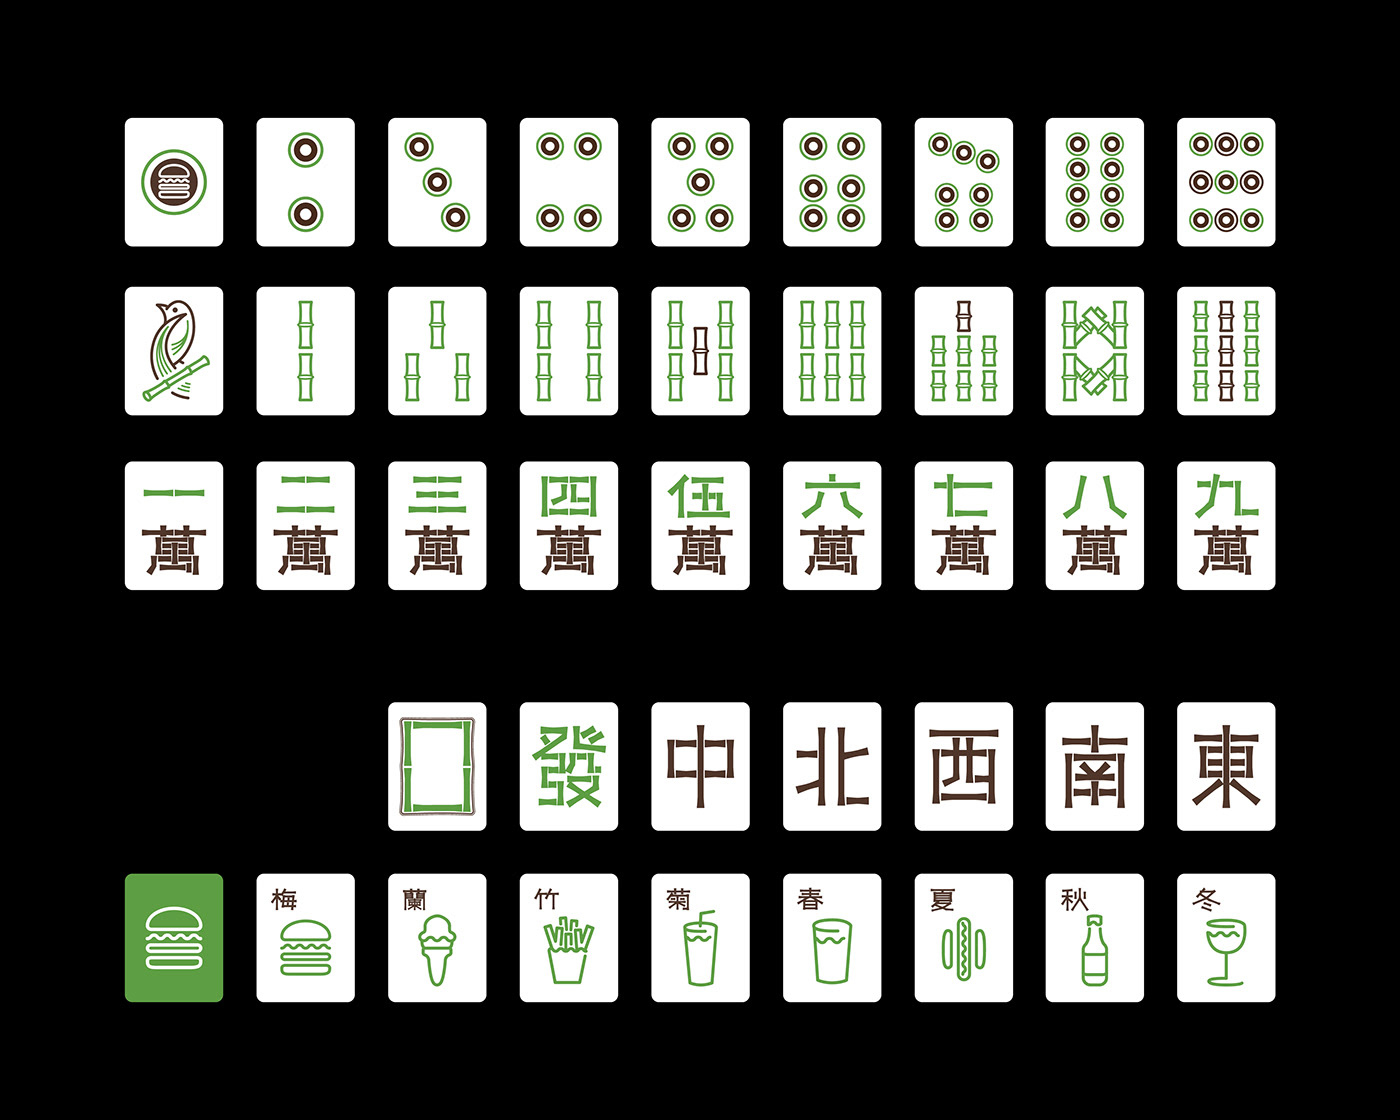 bamboo box font mahjong MAHJONG GRAPHICS package Packaging PACKAGING DESIGN X restaurant Shakeshack